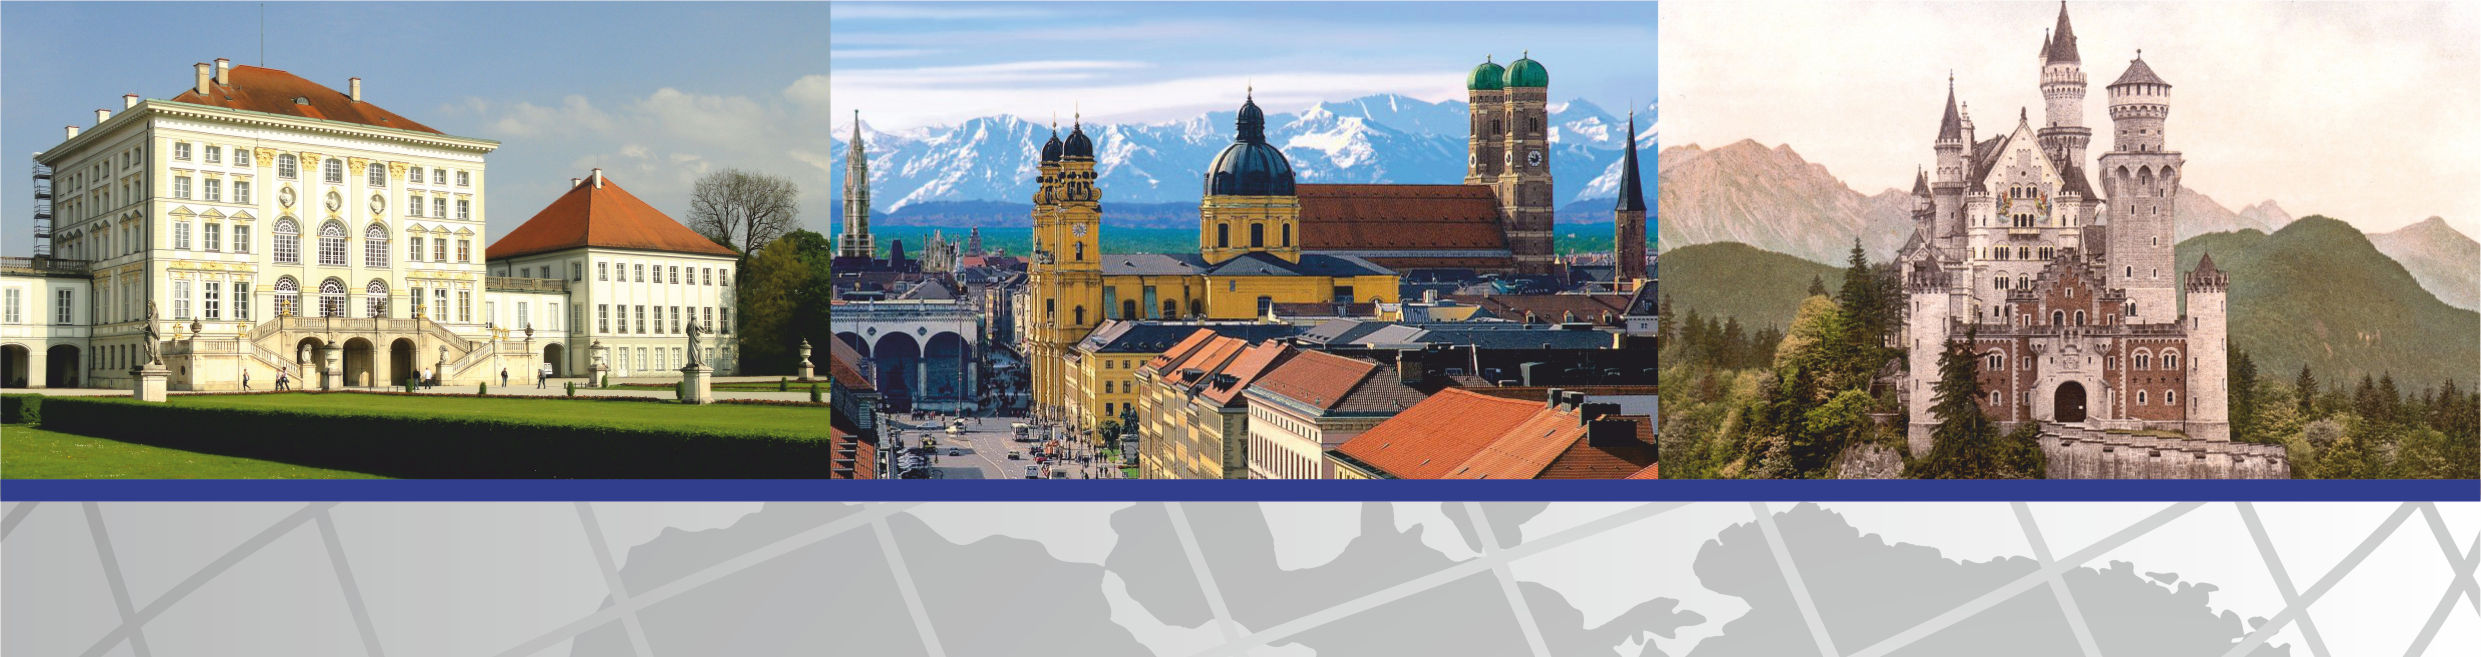 Tourist information about visiting Munich